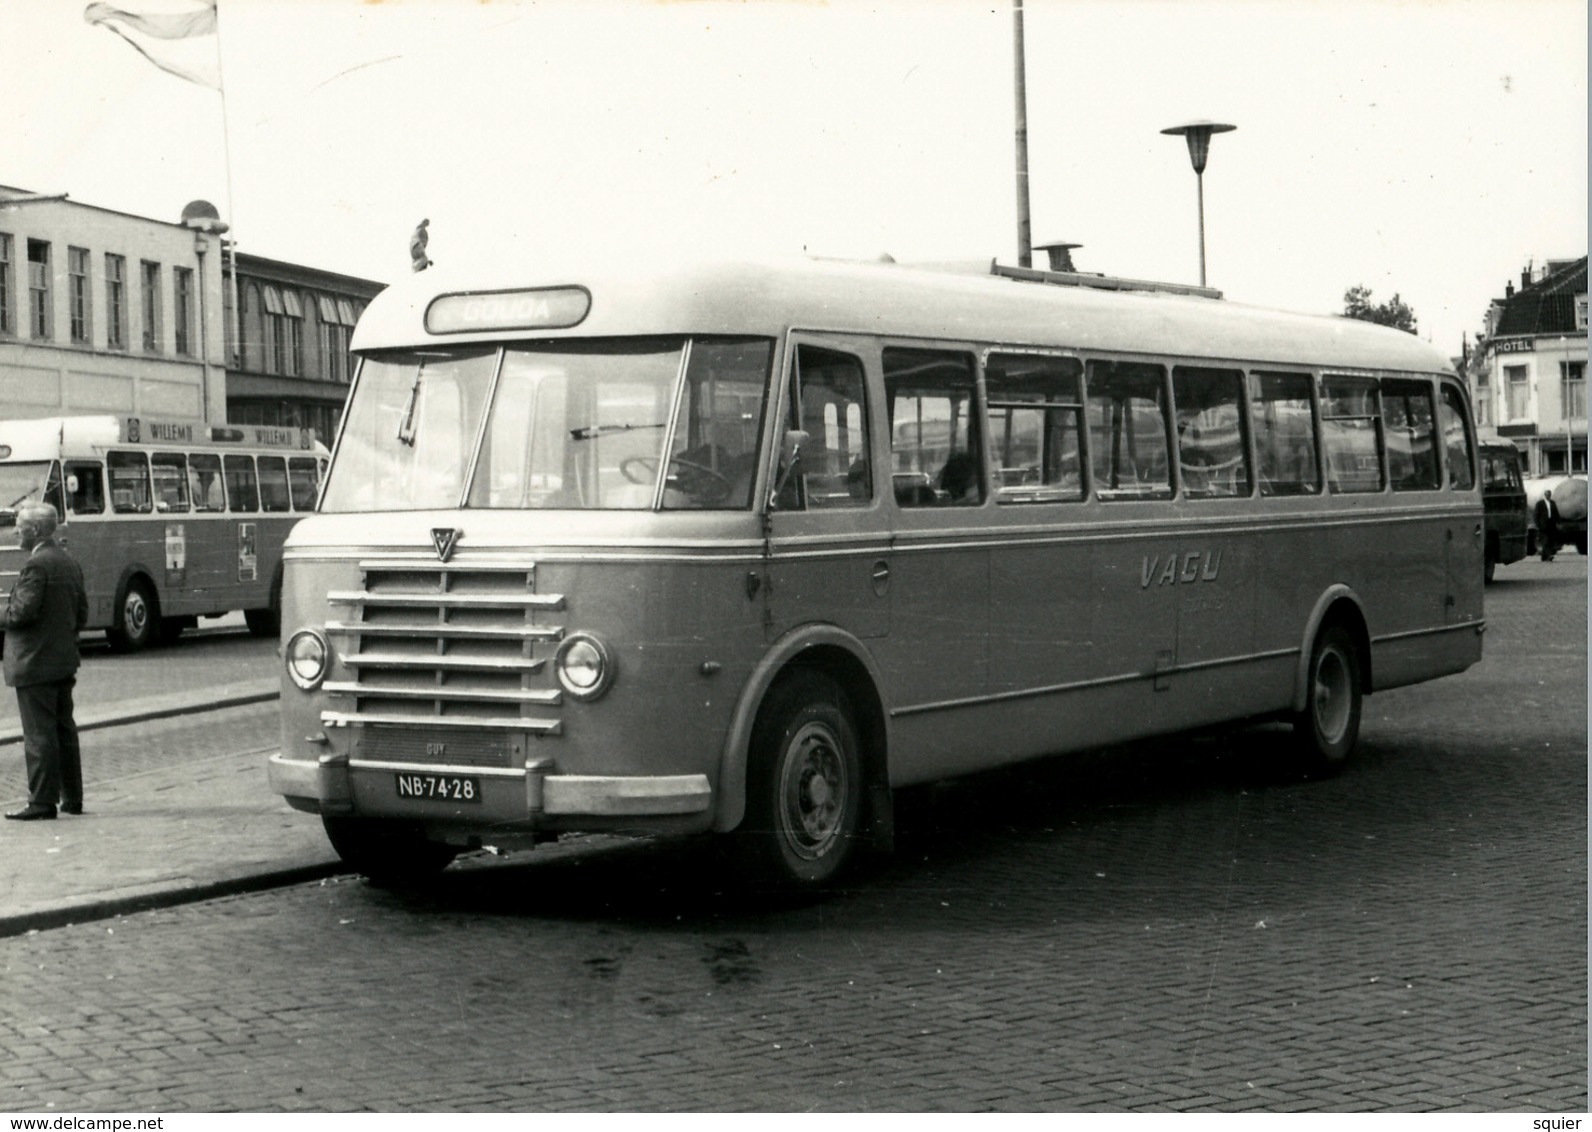 Bus, Omnibus, Guy/ Verheul, VAGU Oudewater, Public Transport, Real Photo - Cars